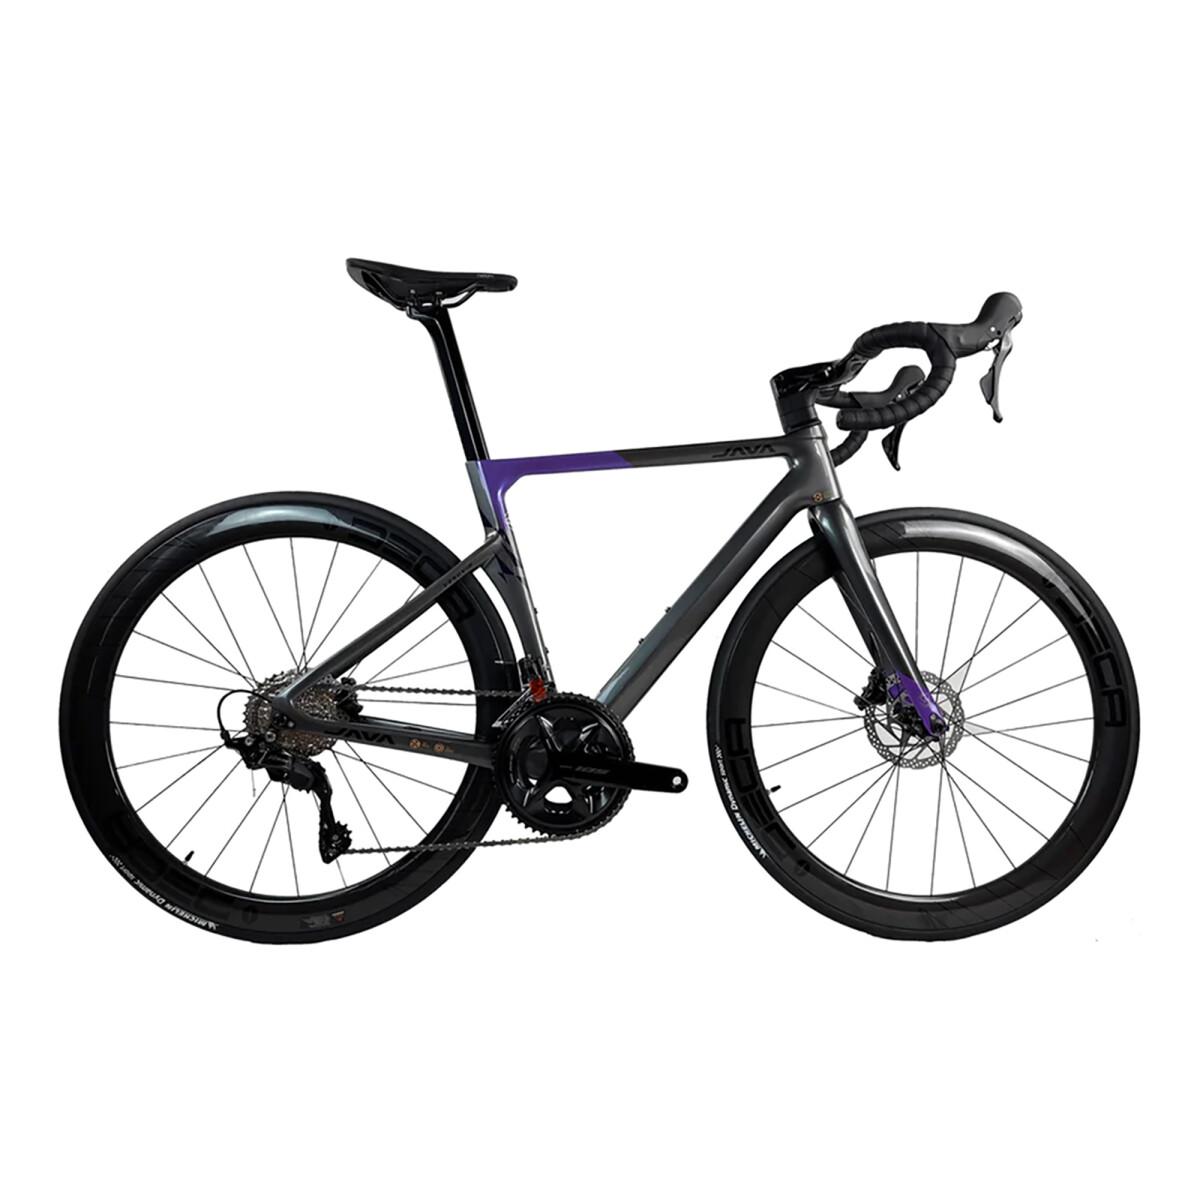 Java - Bicicleta de Ruta VESUVIO R7170 - 24 Velocidades, Talle M. Color Púrpura. - PURPURA 